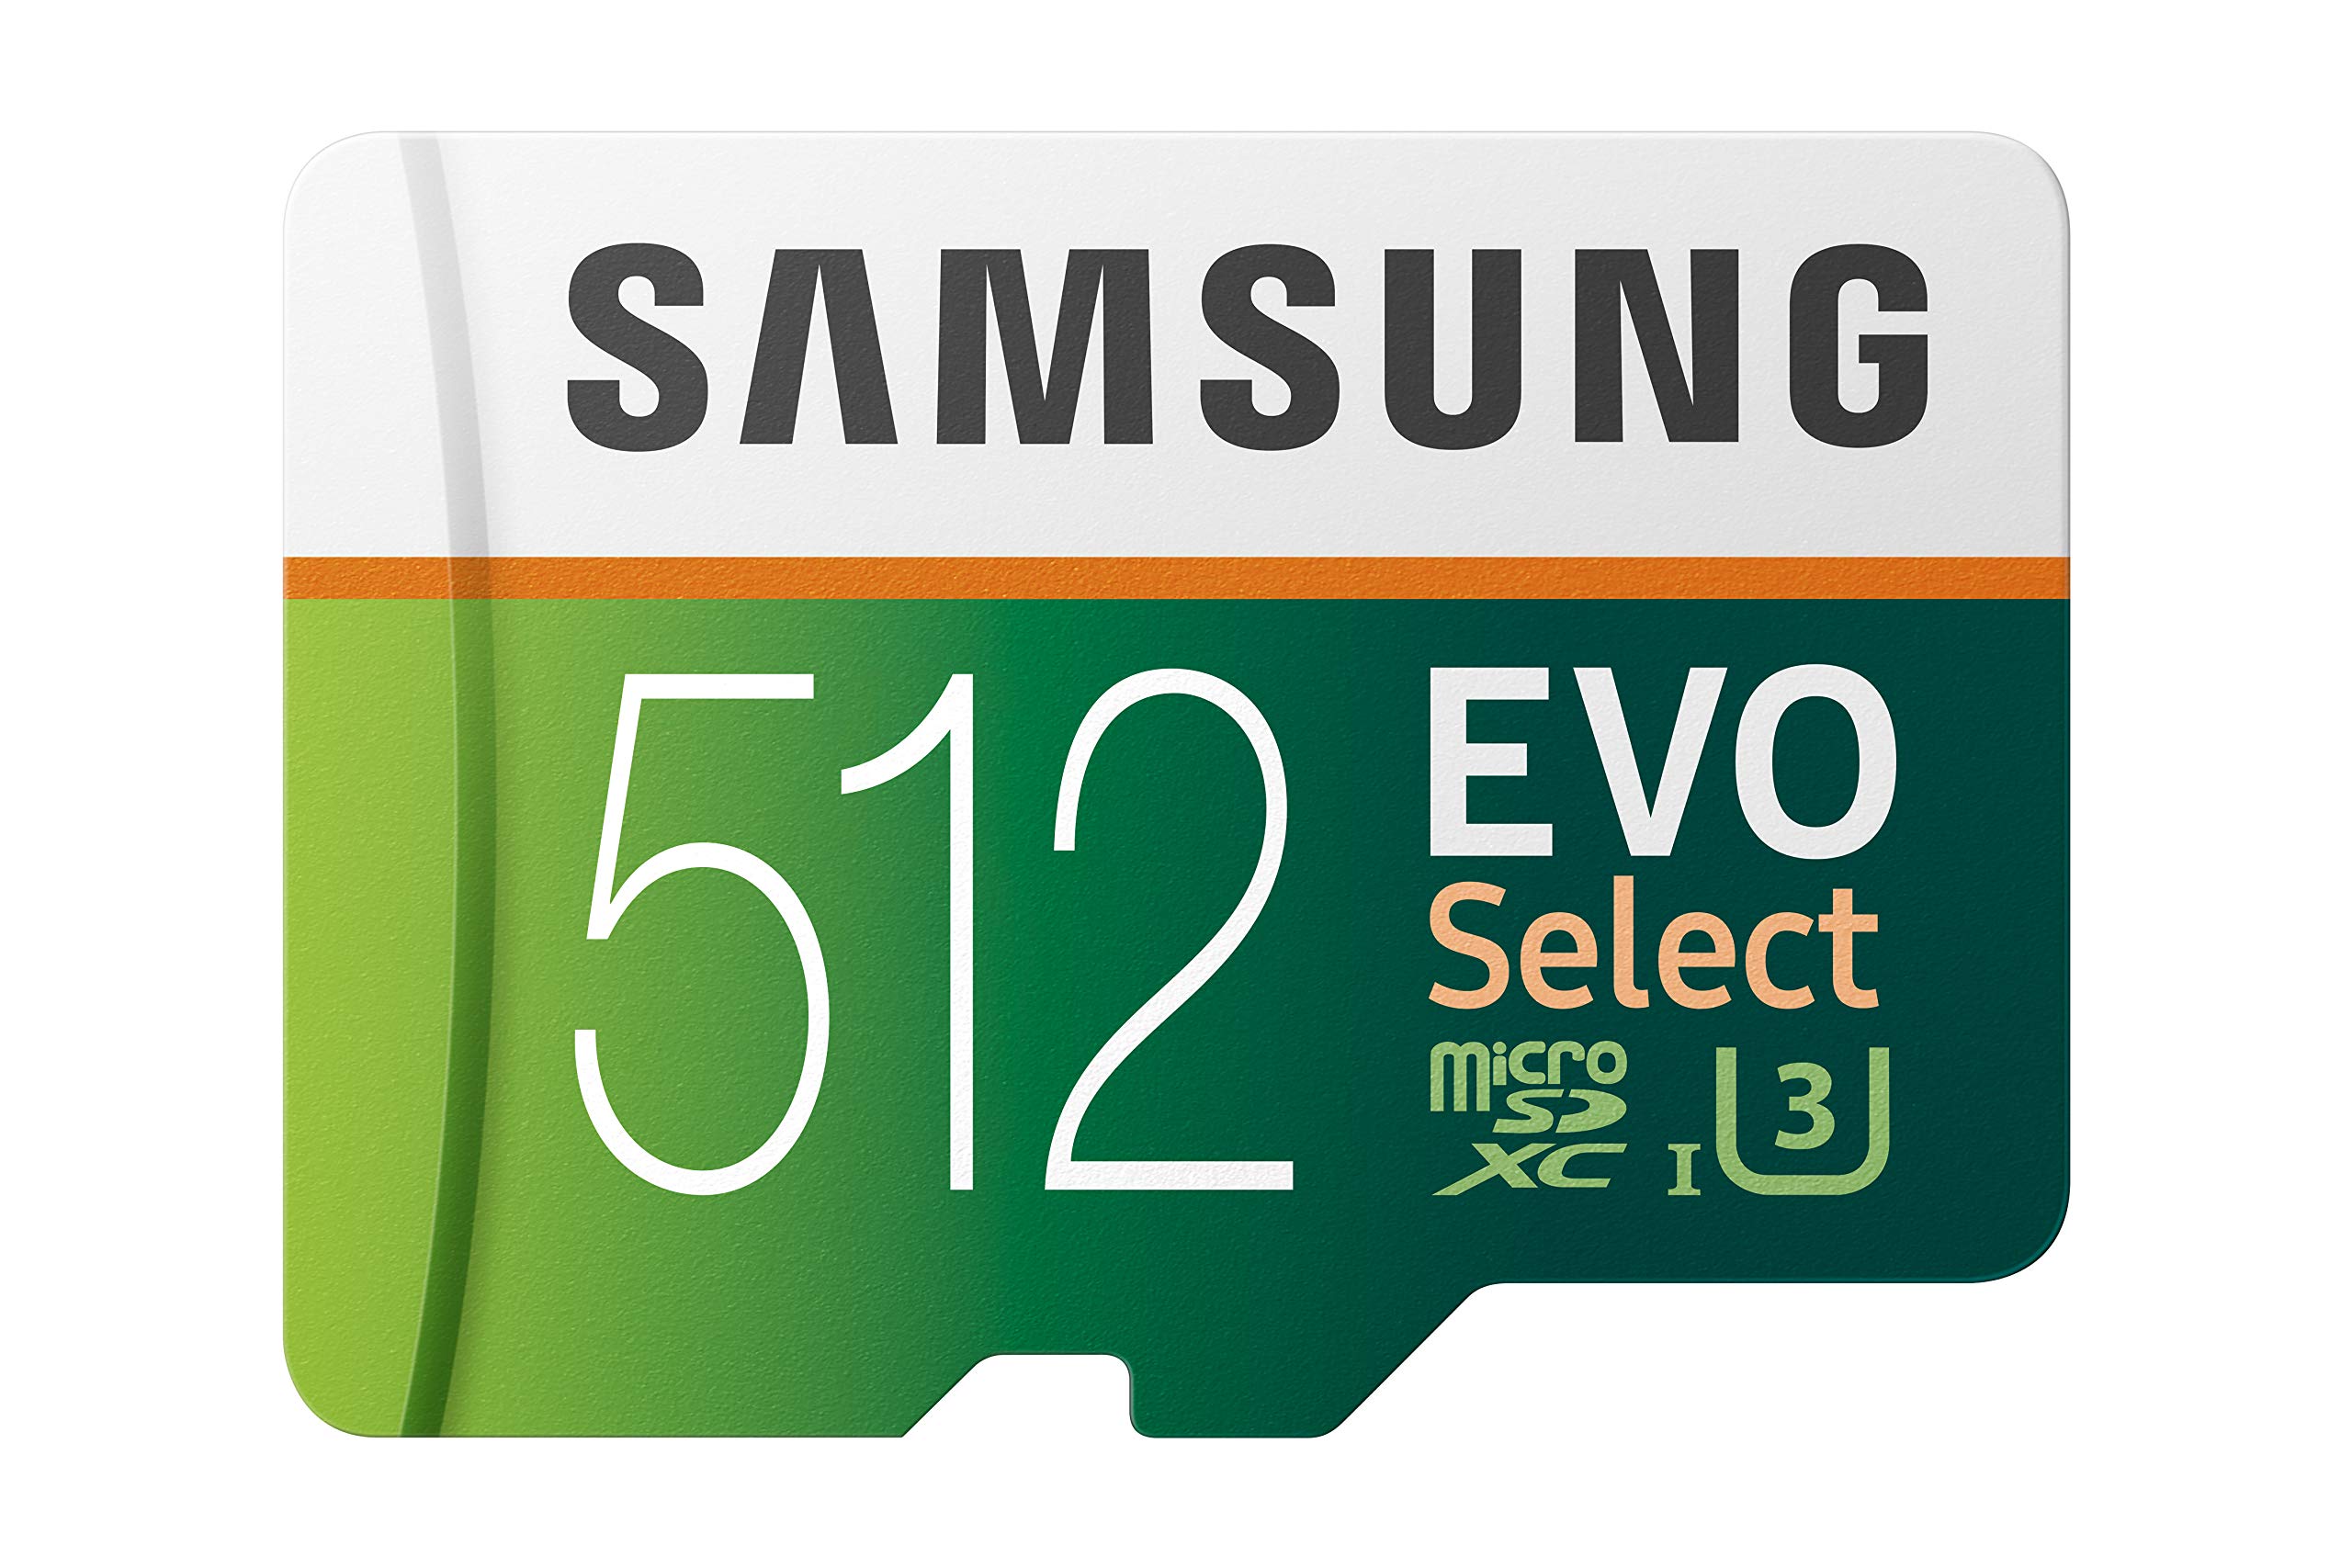 Samsung EVO Select microSD-Karte, 512 GB, 100 MB/s und 90 MB/s, Speicherkarte für Full HD & 4K UHD, Inkl. SD-Adapter für Smartphone, Tablet, Action-Kamera, Drohne und Notebook